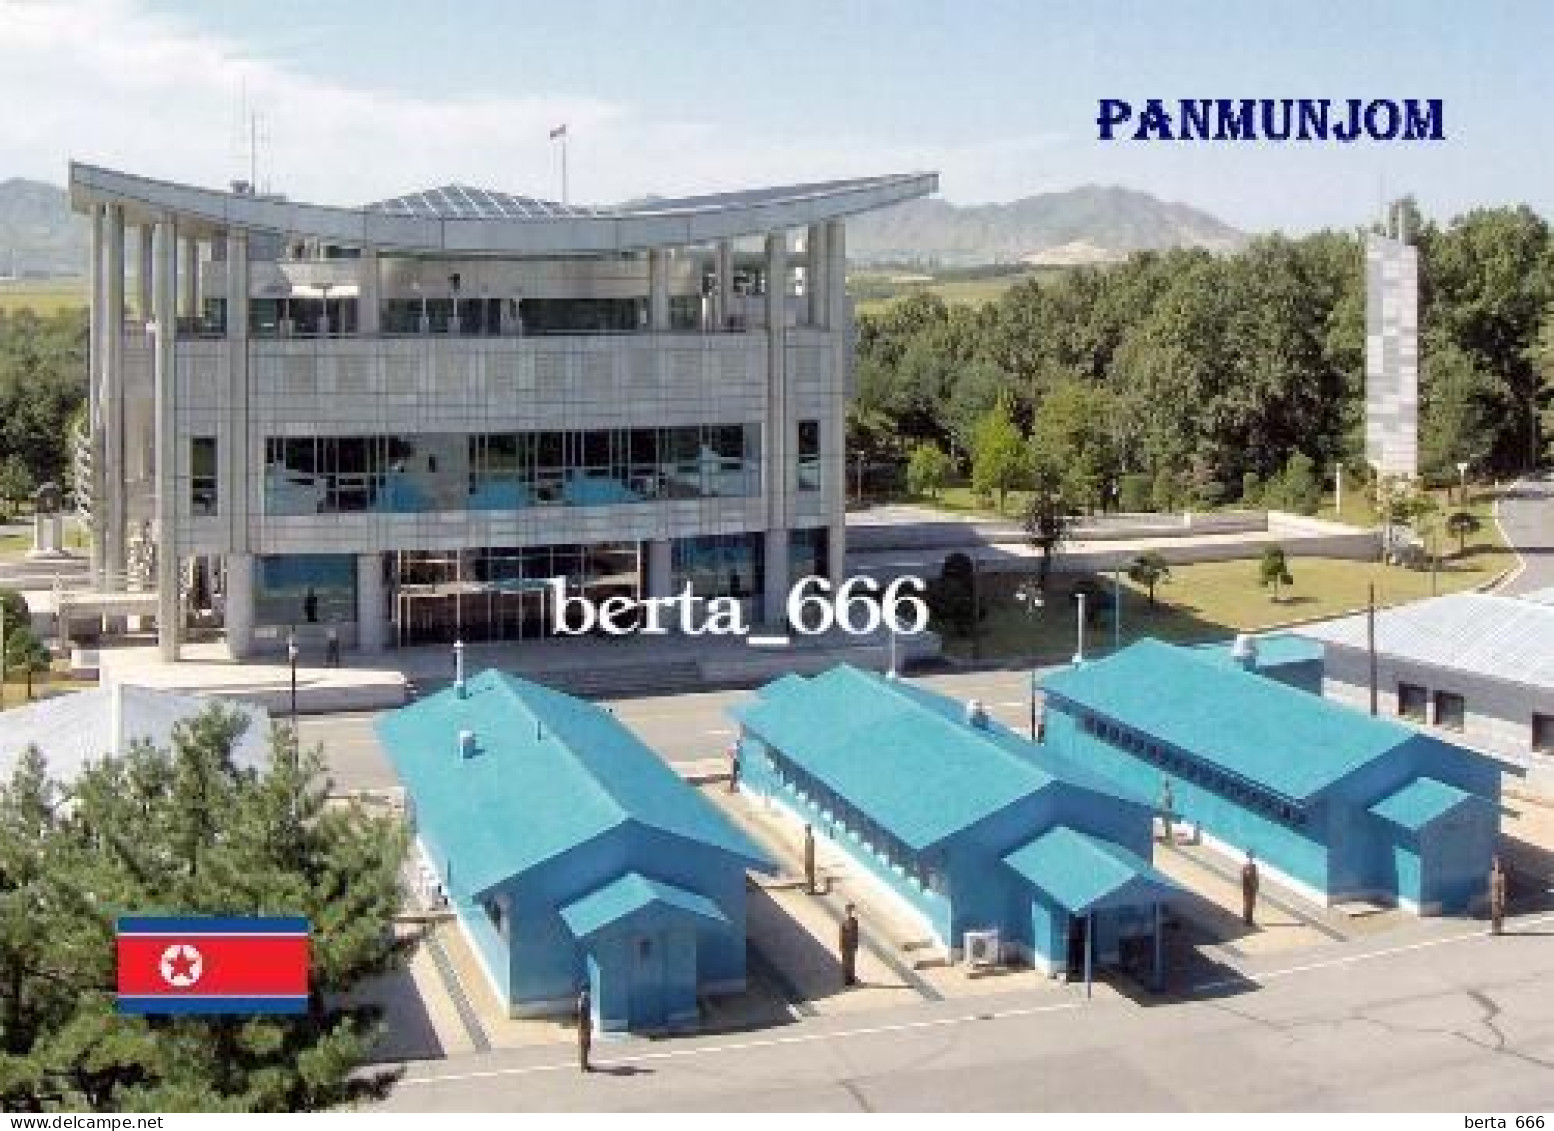 North Korea Panmunjom Joint Security Area New Postcard - Korea, North